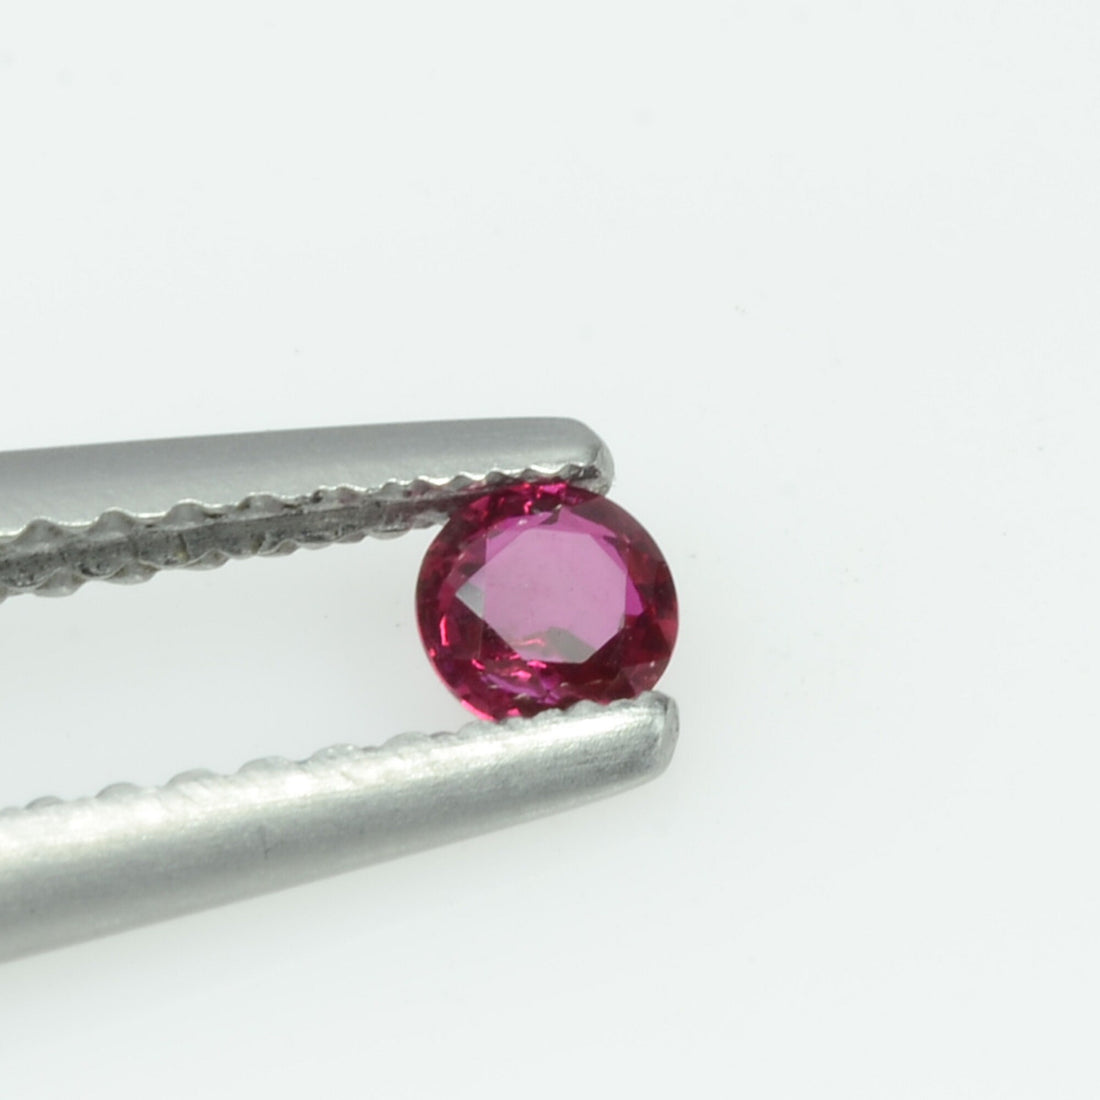 2.9 mm Natural Burma Ruby Loose Gemstone Round Cut